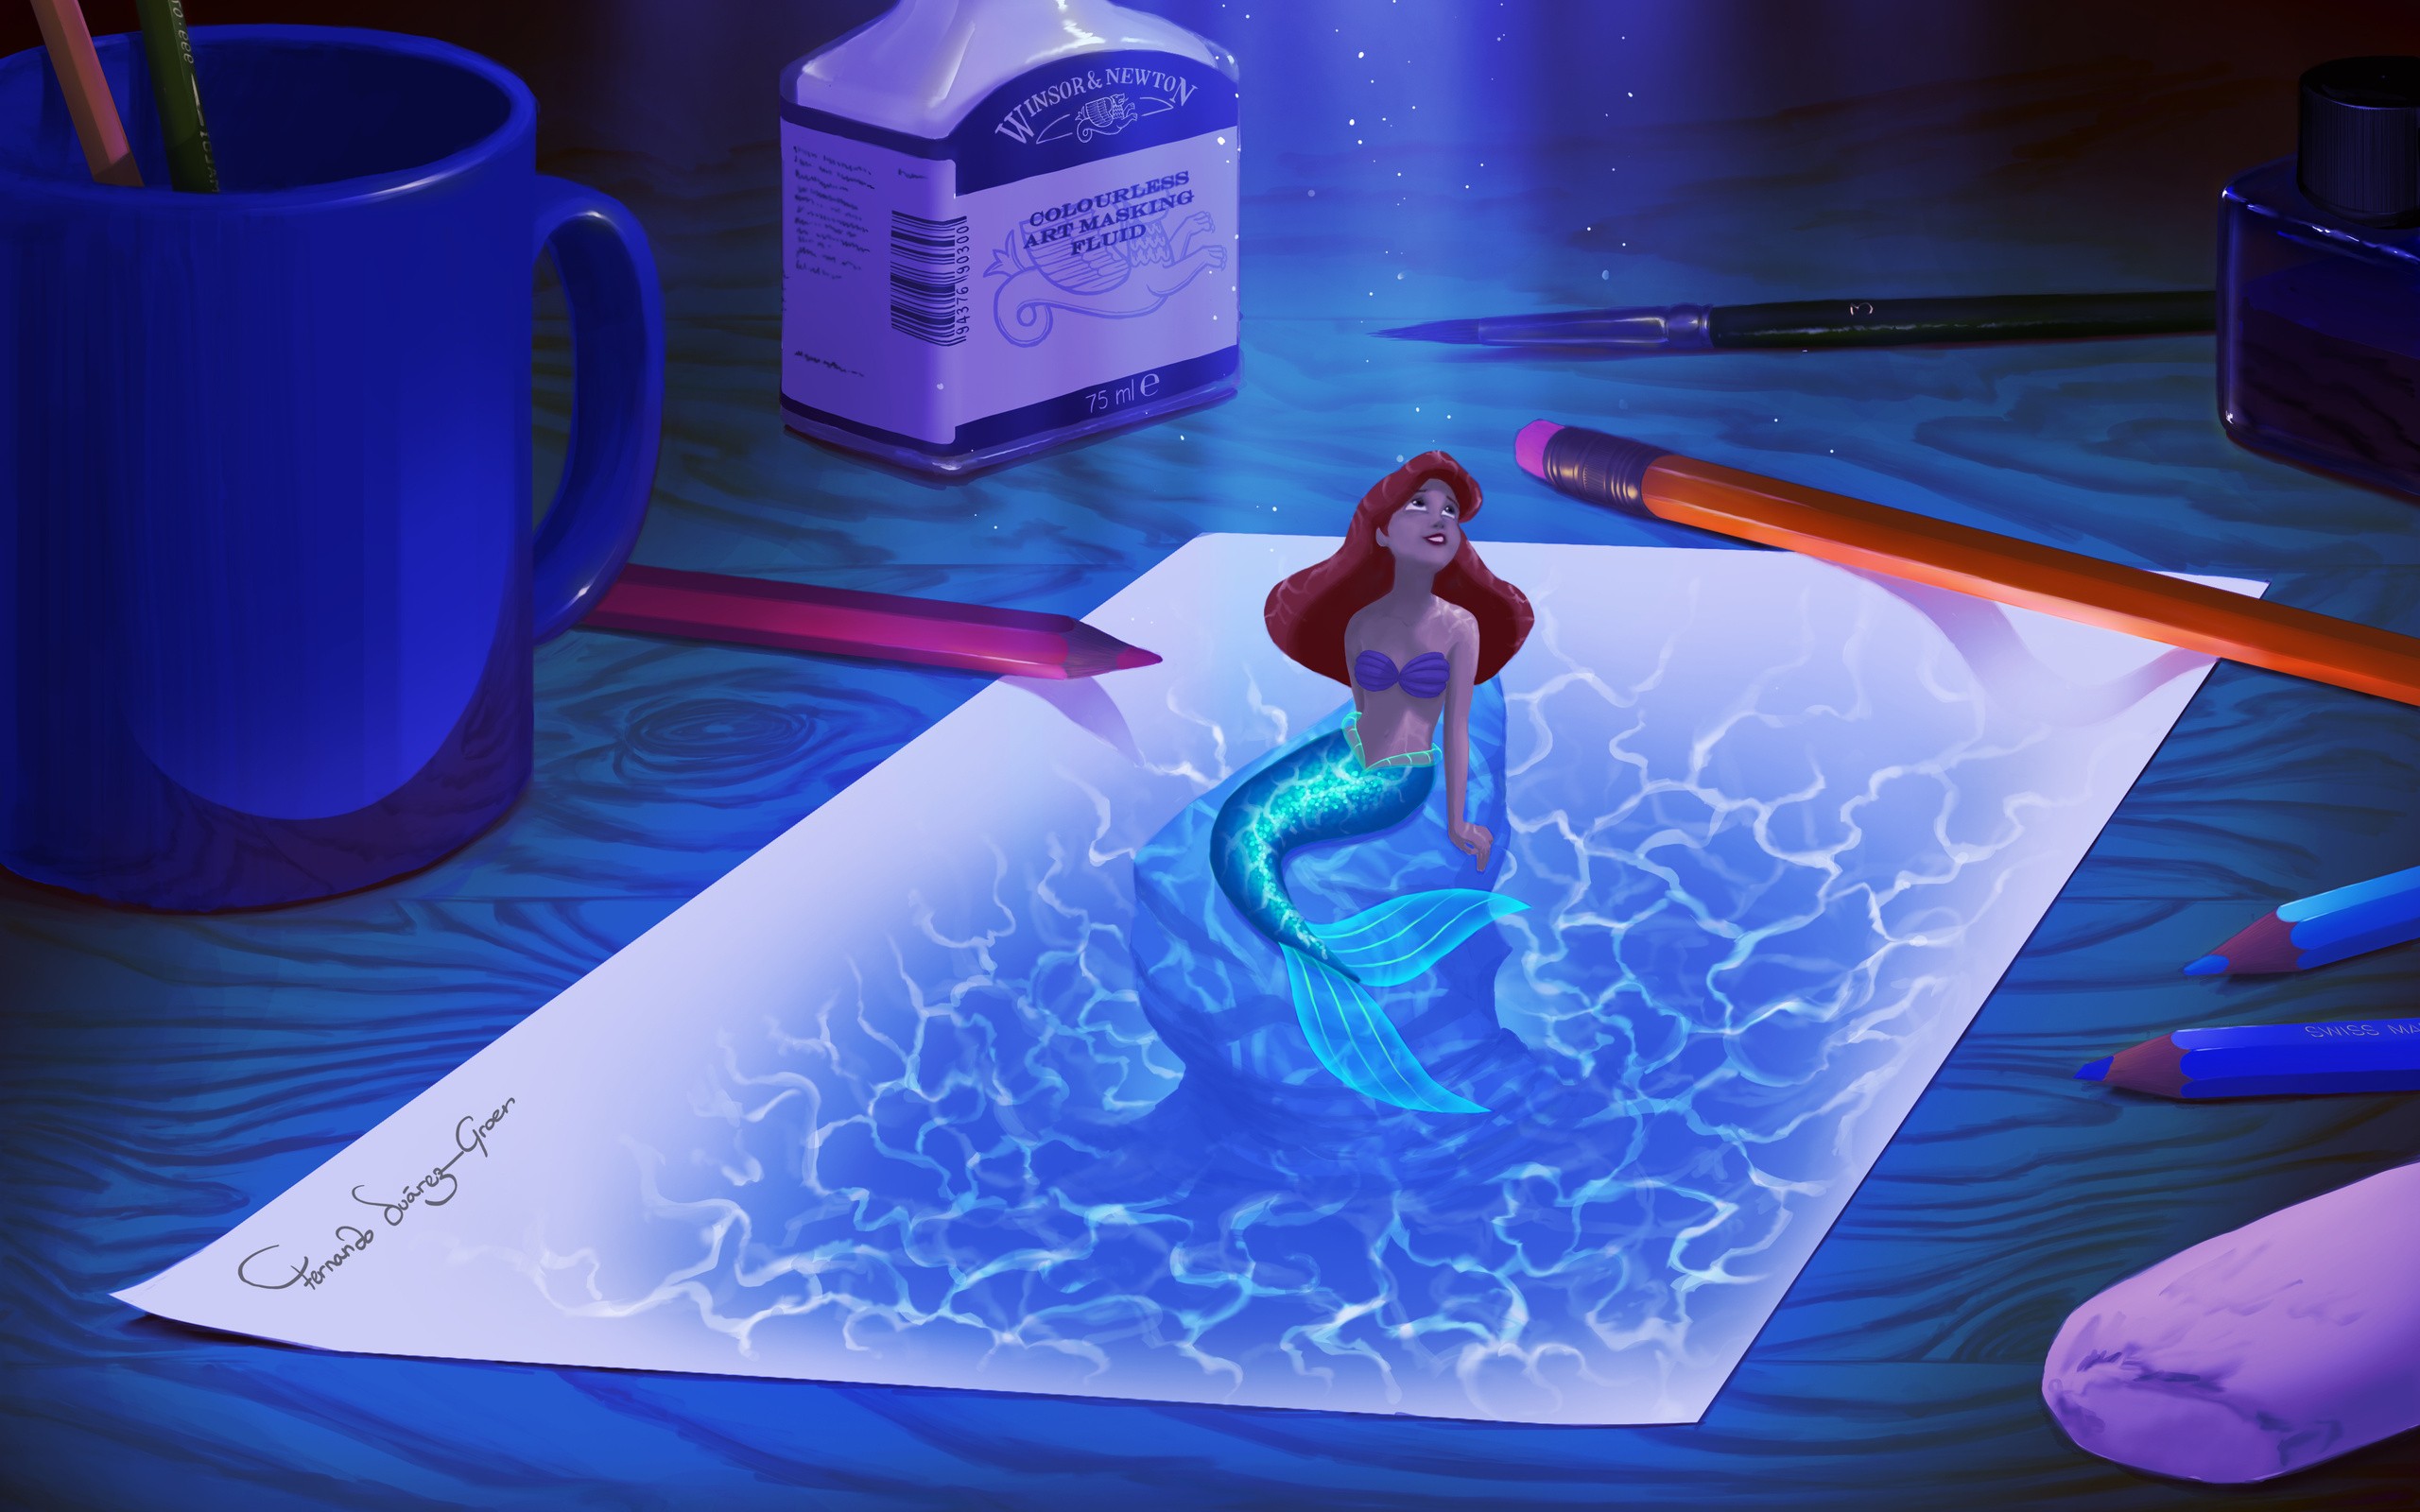 General 2560x1600 cartoon Walt Disney The Little Mermaid digital art watermarked